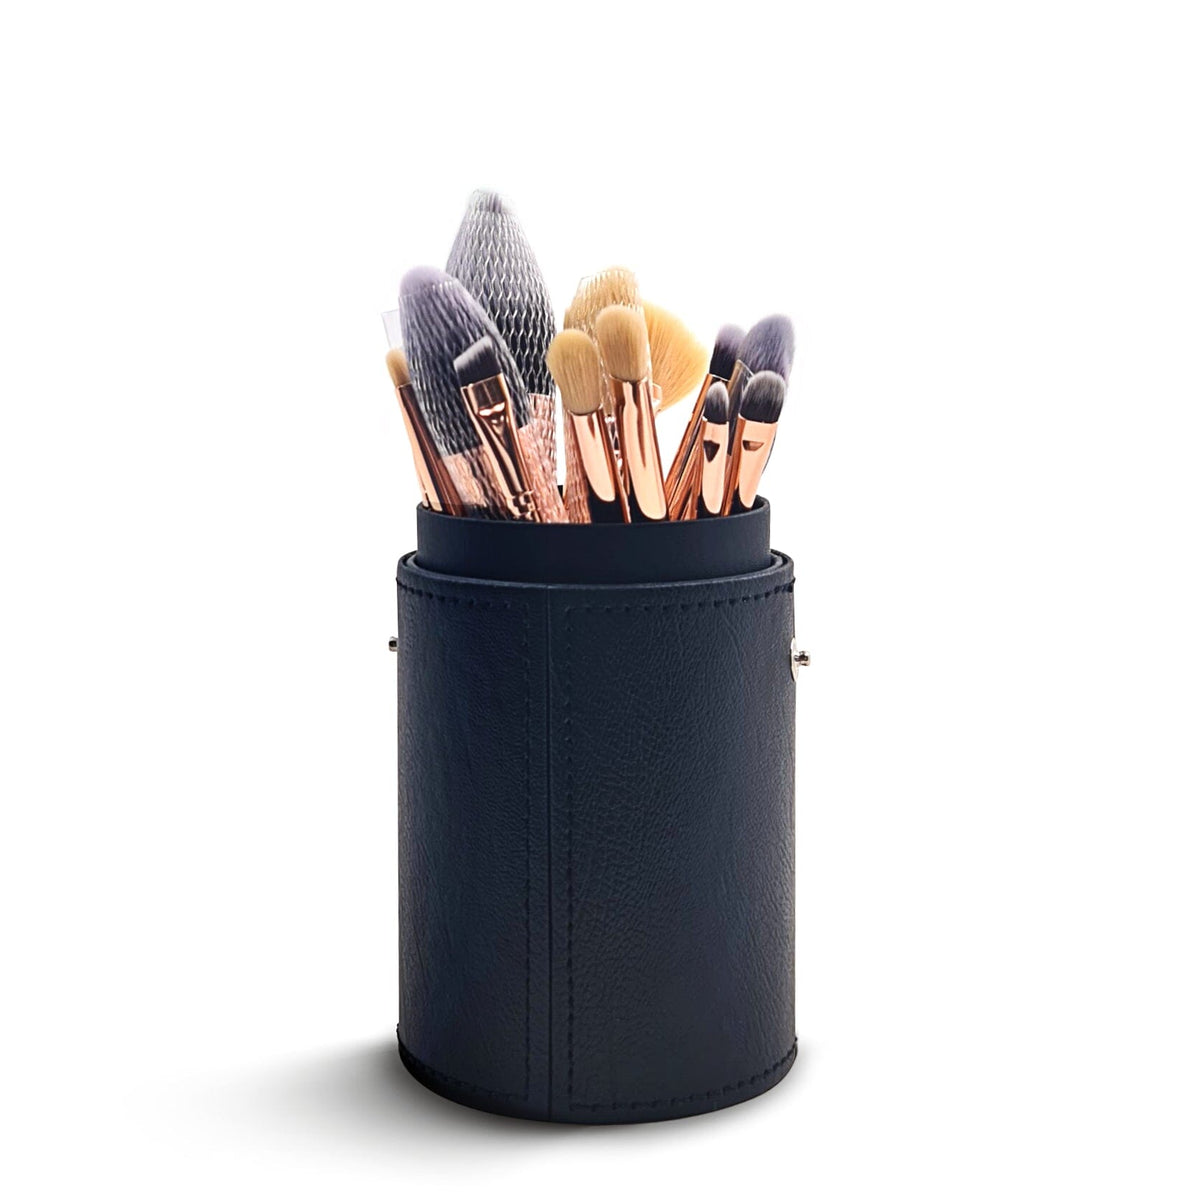 16-Piece Make Up Brush Set with Black Cylinder Case